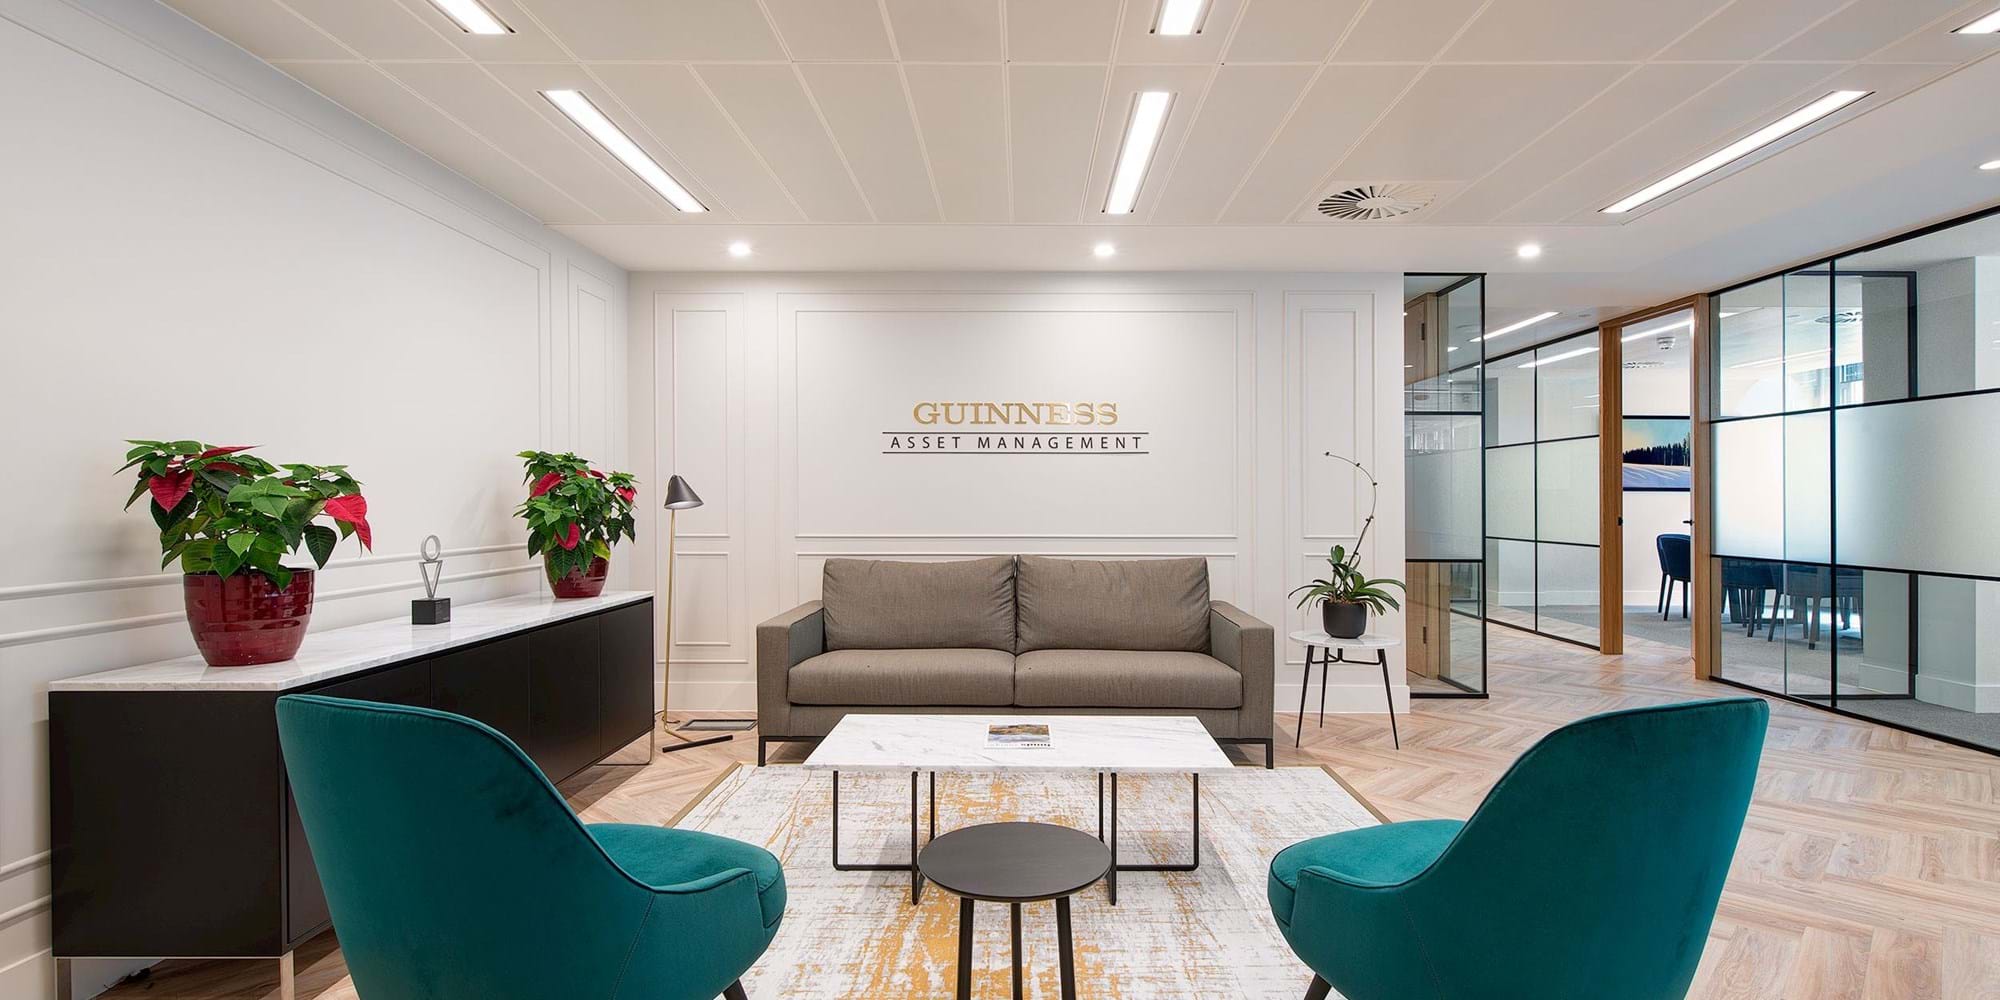 Modus Workspace office design, fit out and refurbishment - Guinness Asset Management - Modus - Guiness Asset Management 01 - website.jpg